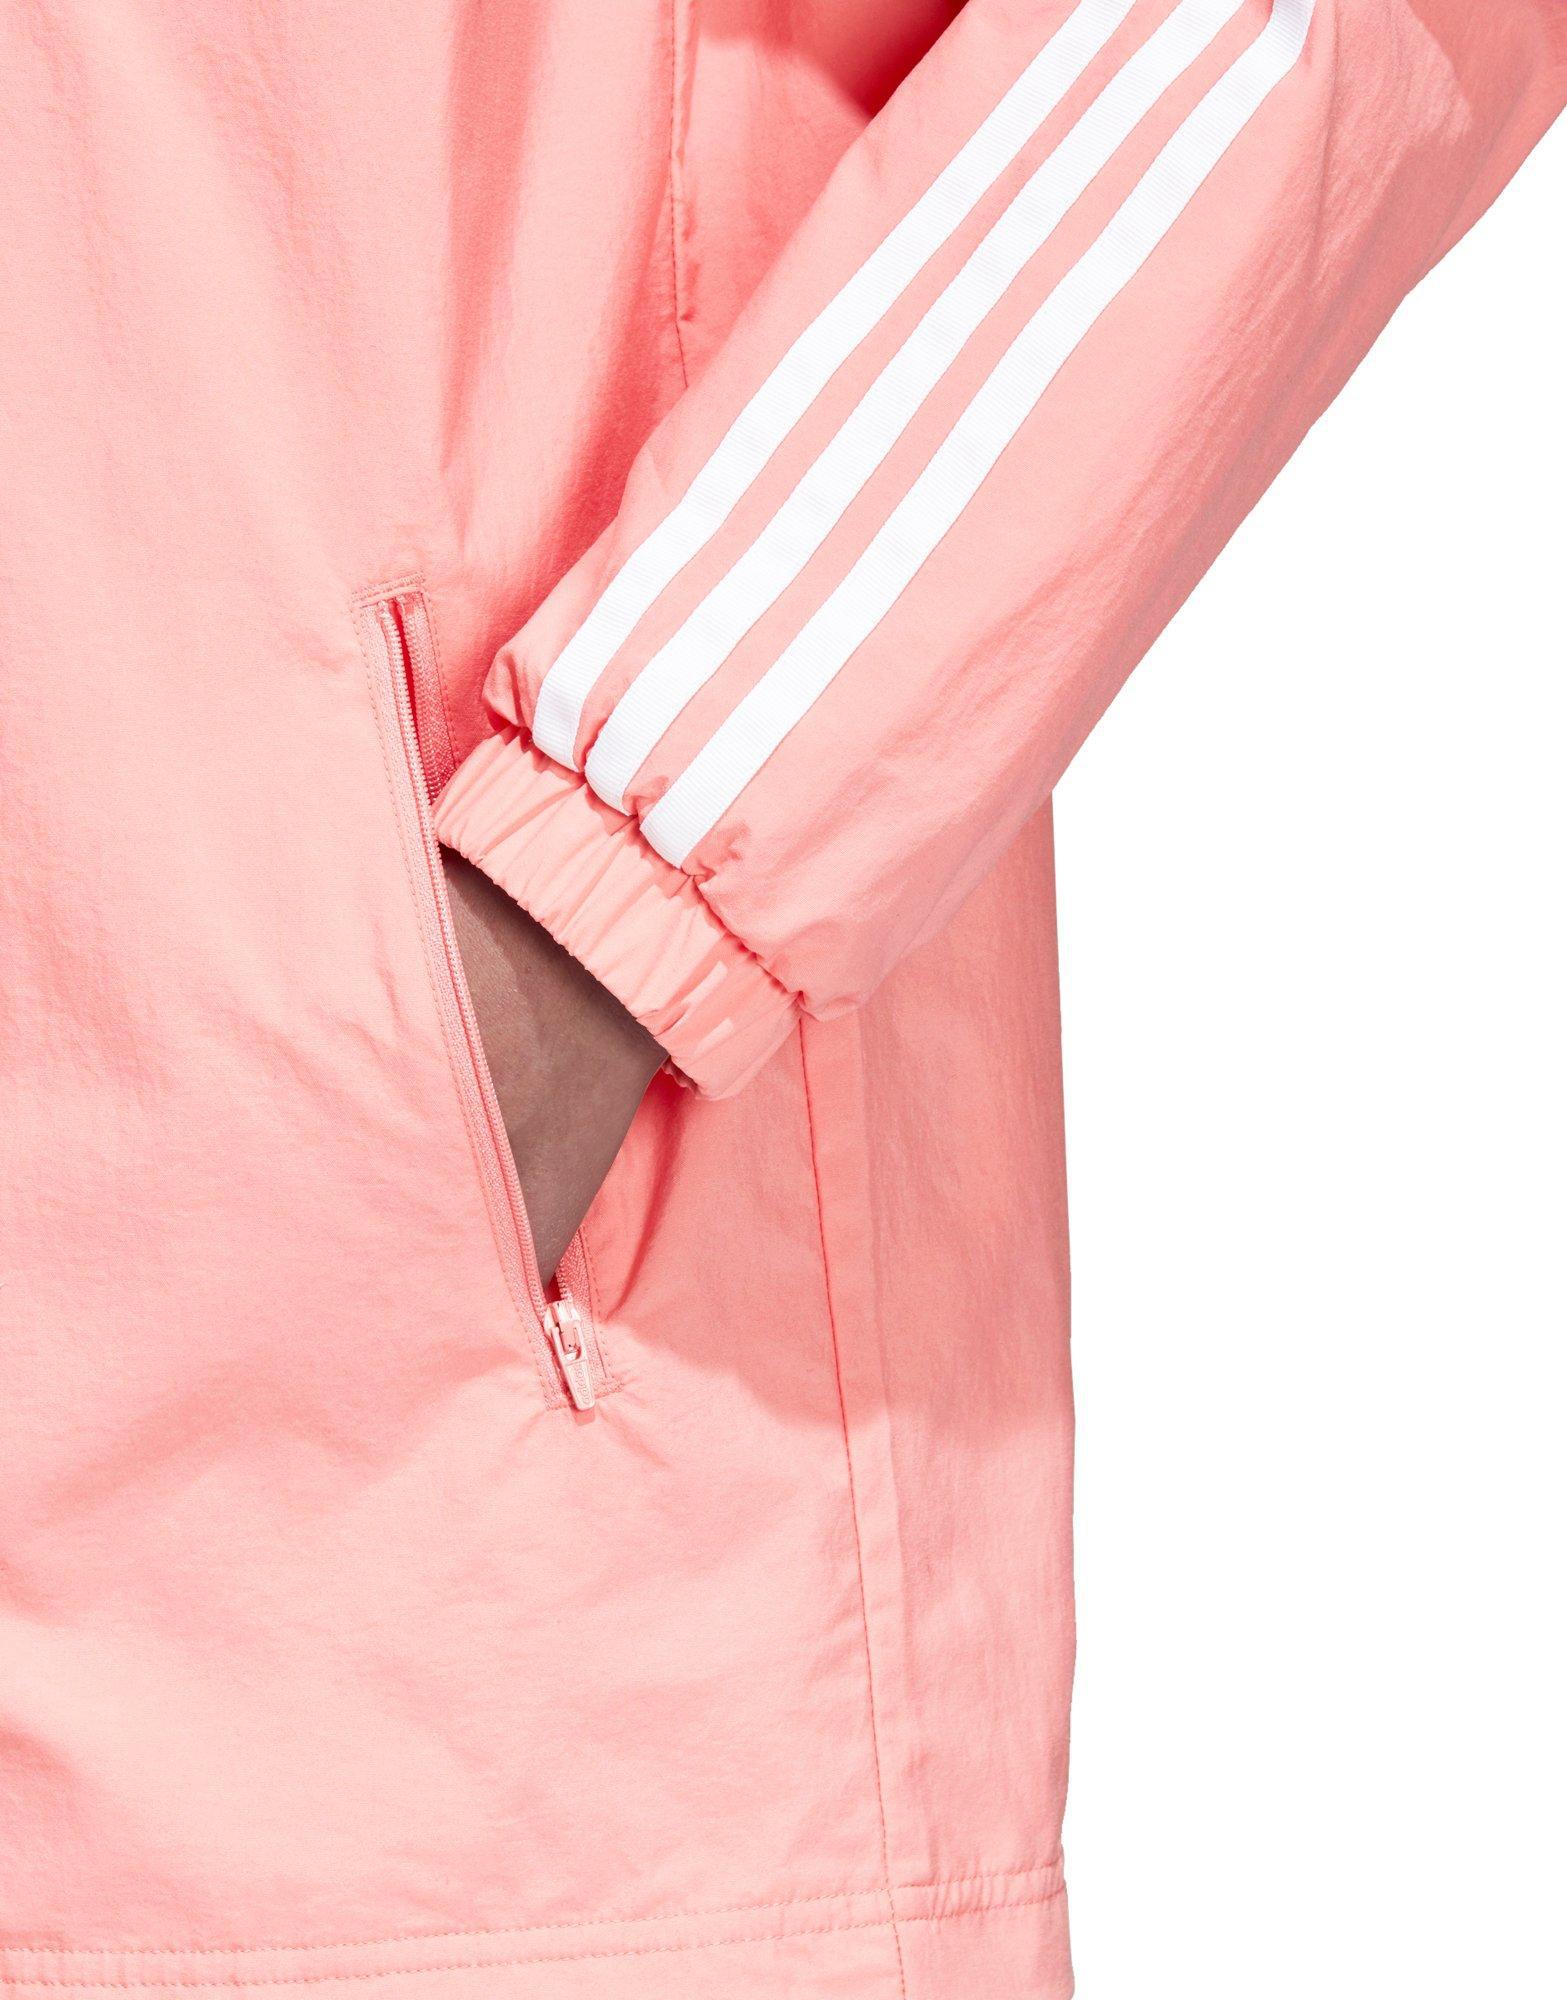 adidas stadium jacket pink